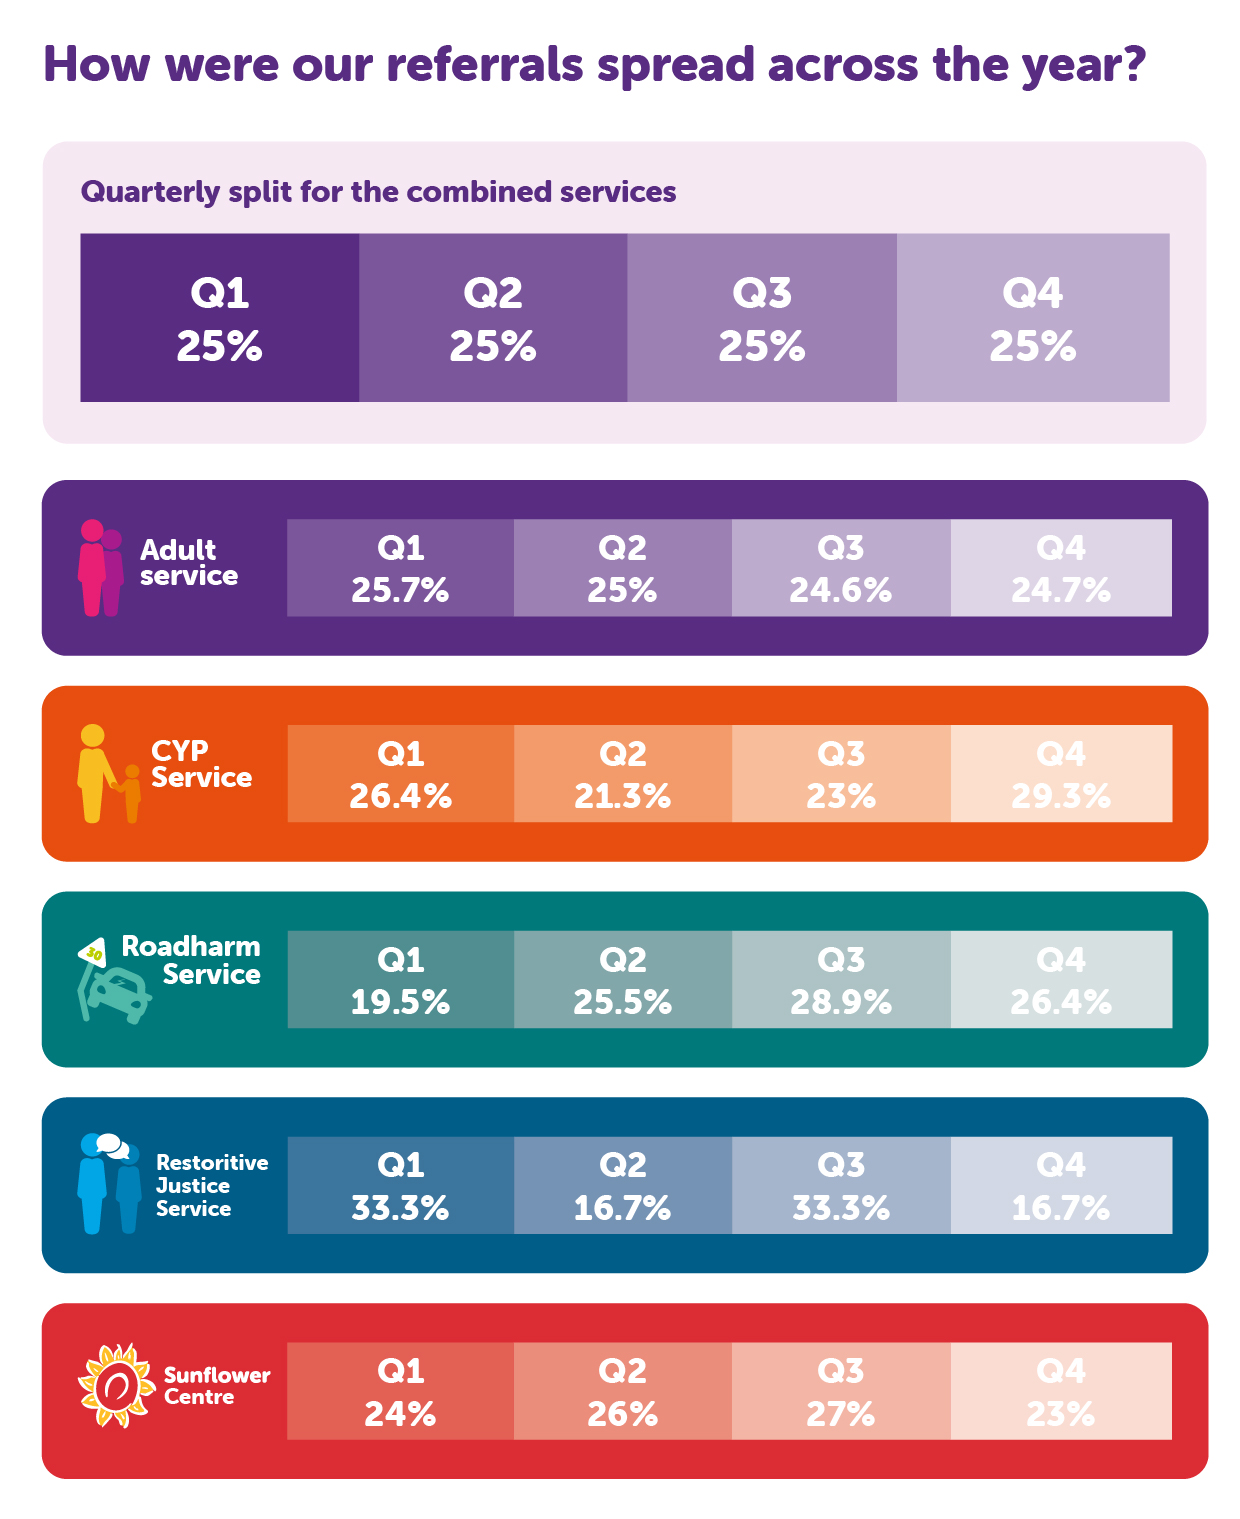 How were our referrals spread across the year? Quarterly split for the combined services Q1 25% Q2 25% Q3 25% Q4 25% Adult service Q1 25.7% Q2 25% Q3 24.6% Q4 24.7% CYP Service Q1 26.4% Q2 21.3% Q3 23% Q4 29.3% Roadharm Service Q1 19.5% Q2 25.5% Q3 28.9% Q4 26.4% Restorative Justice Service Q1 33.3% Q2 16.7% Q3 33.3% Q4 16.7% Sunflower Centre Q1 24% Q2 26% Q3 27% Q4 23%